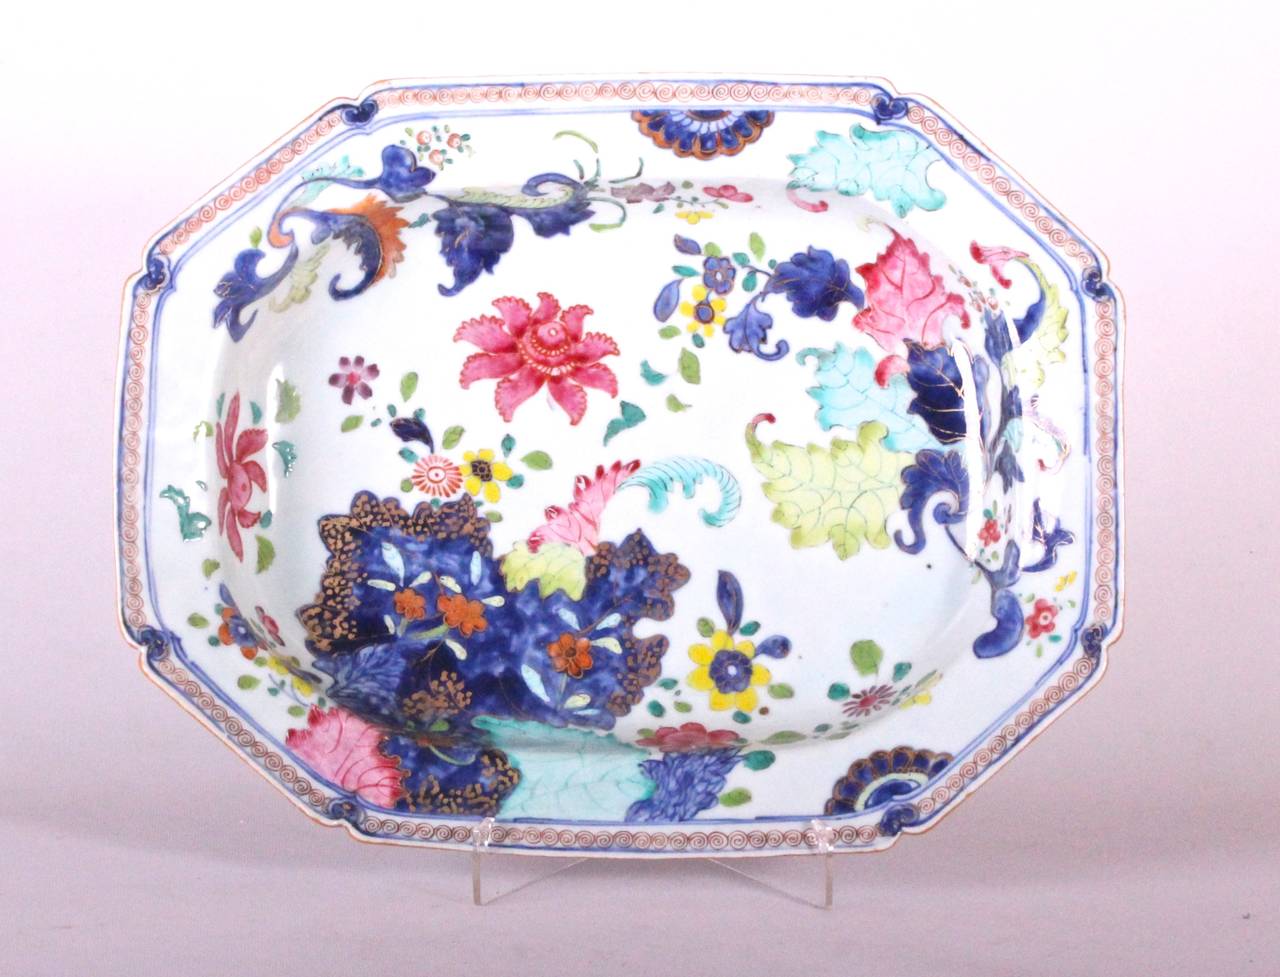 Tobacco leaf platter Chinese export porcelain.
Qianlong period (1736-1795).